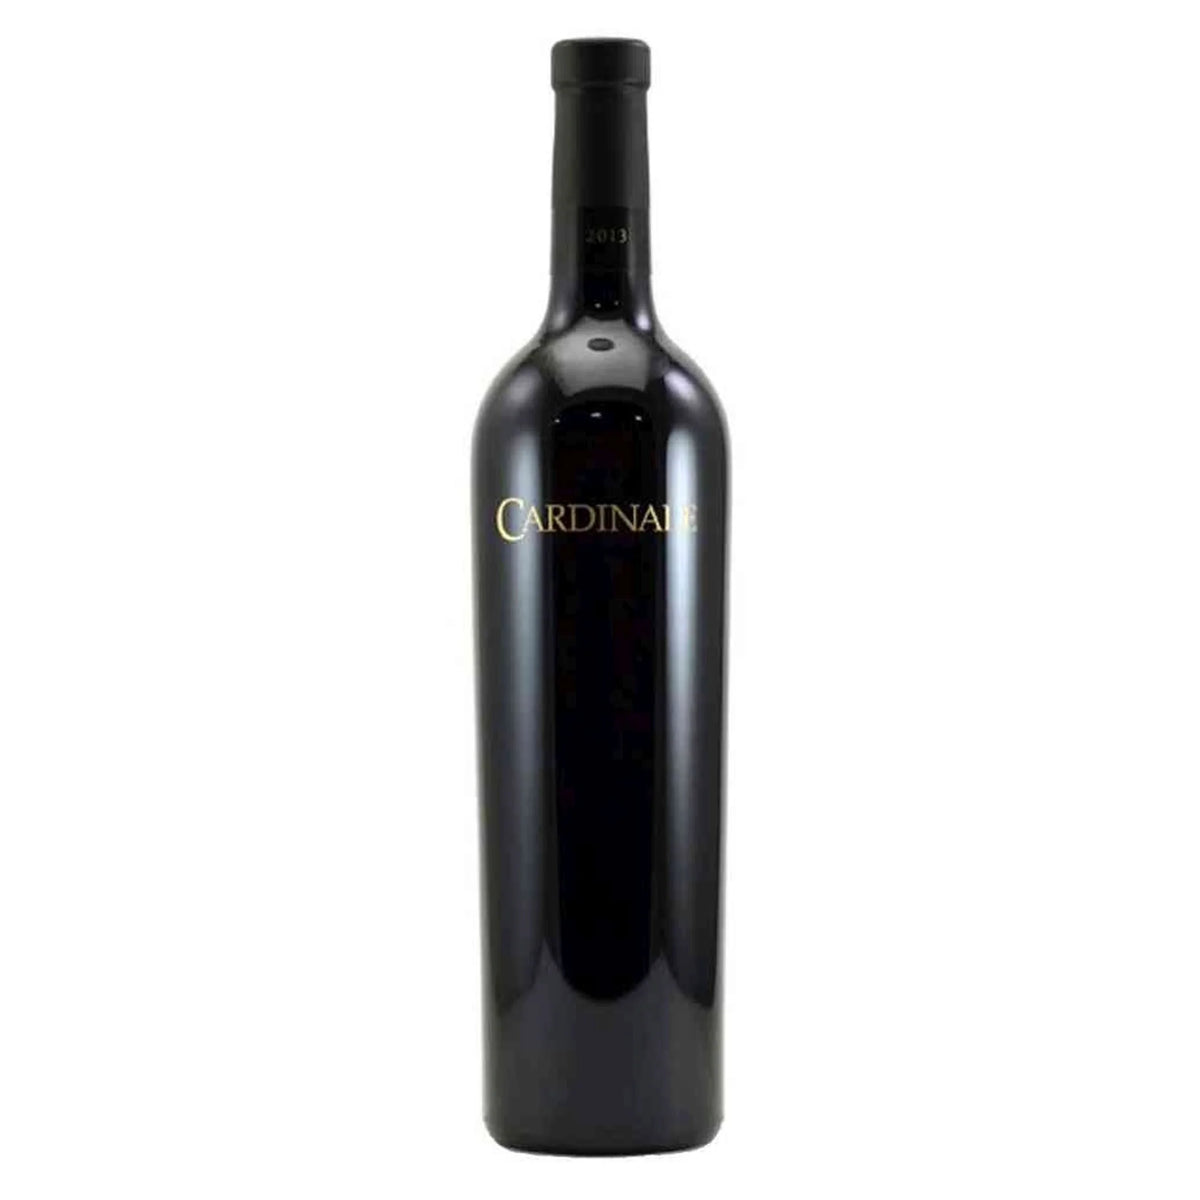 Cardinale-Rotwein-Cabernet Sauvignon-2015 Proprietary Red Wine-WINECOM